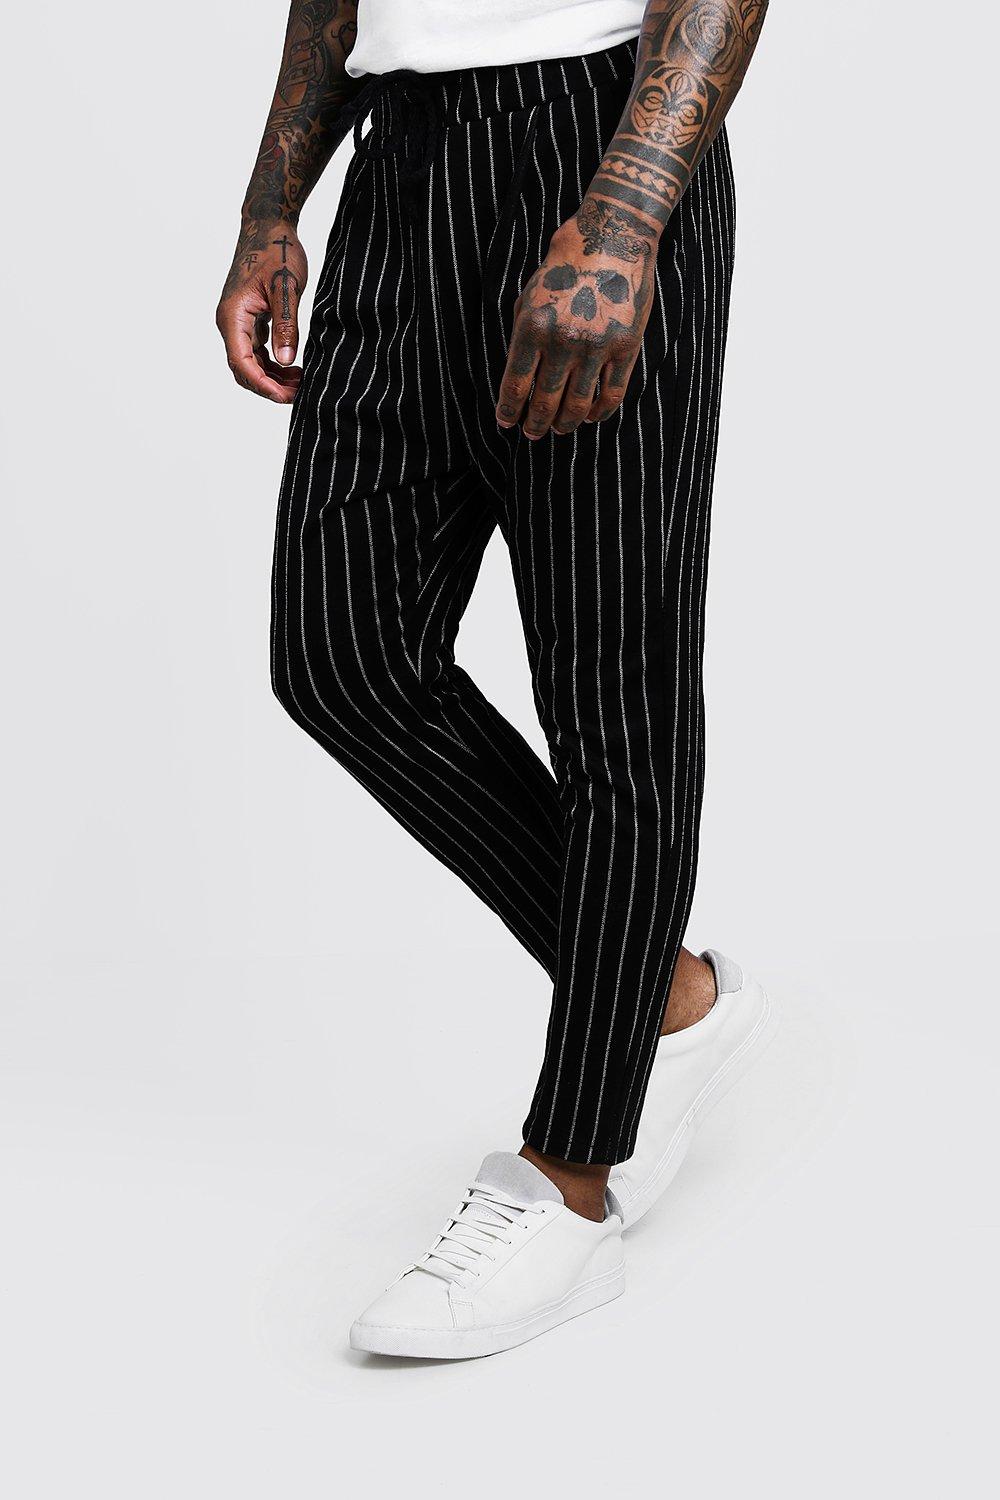 black pinstripe pants outfit